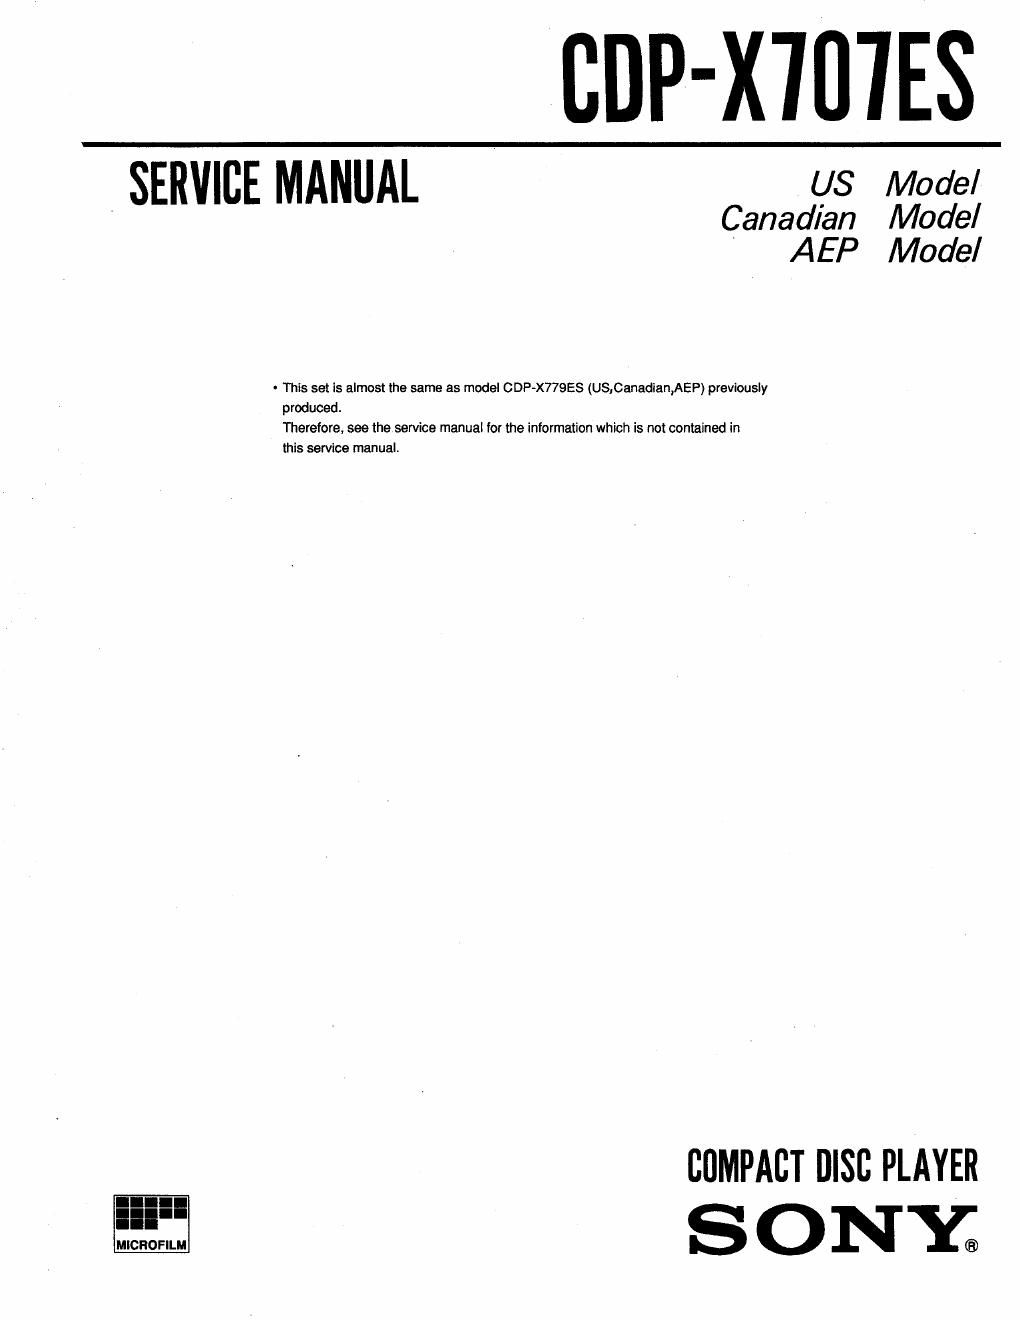 sony cdp x707es service manual